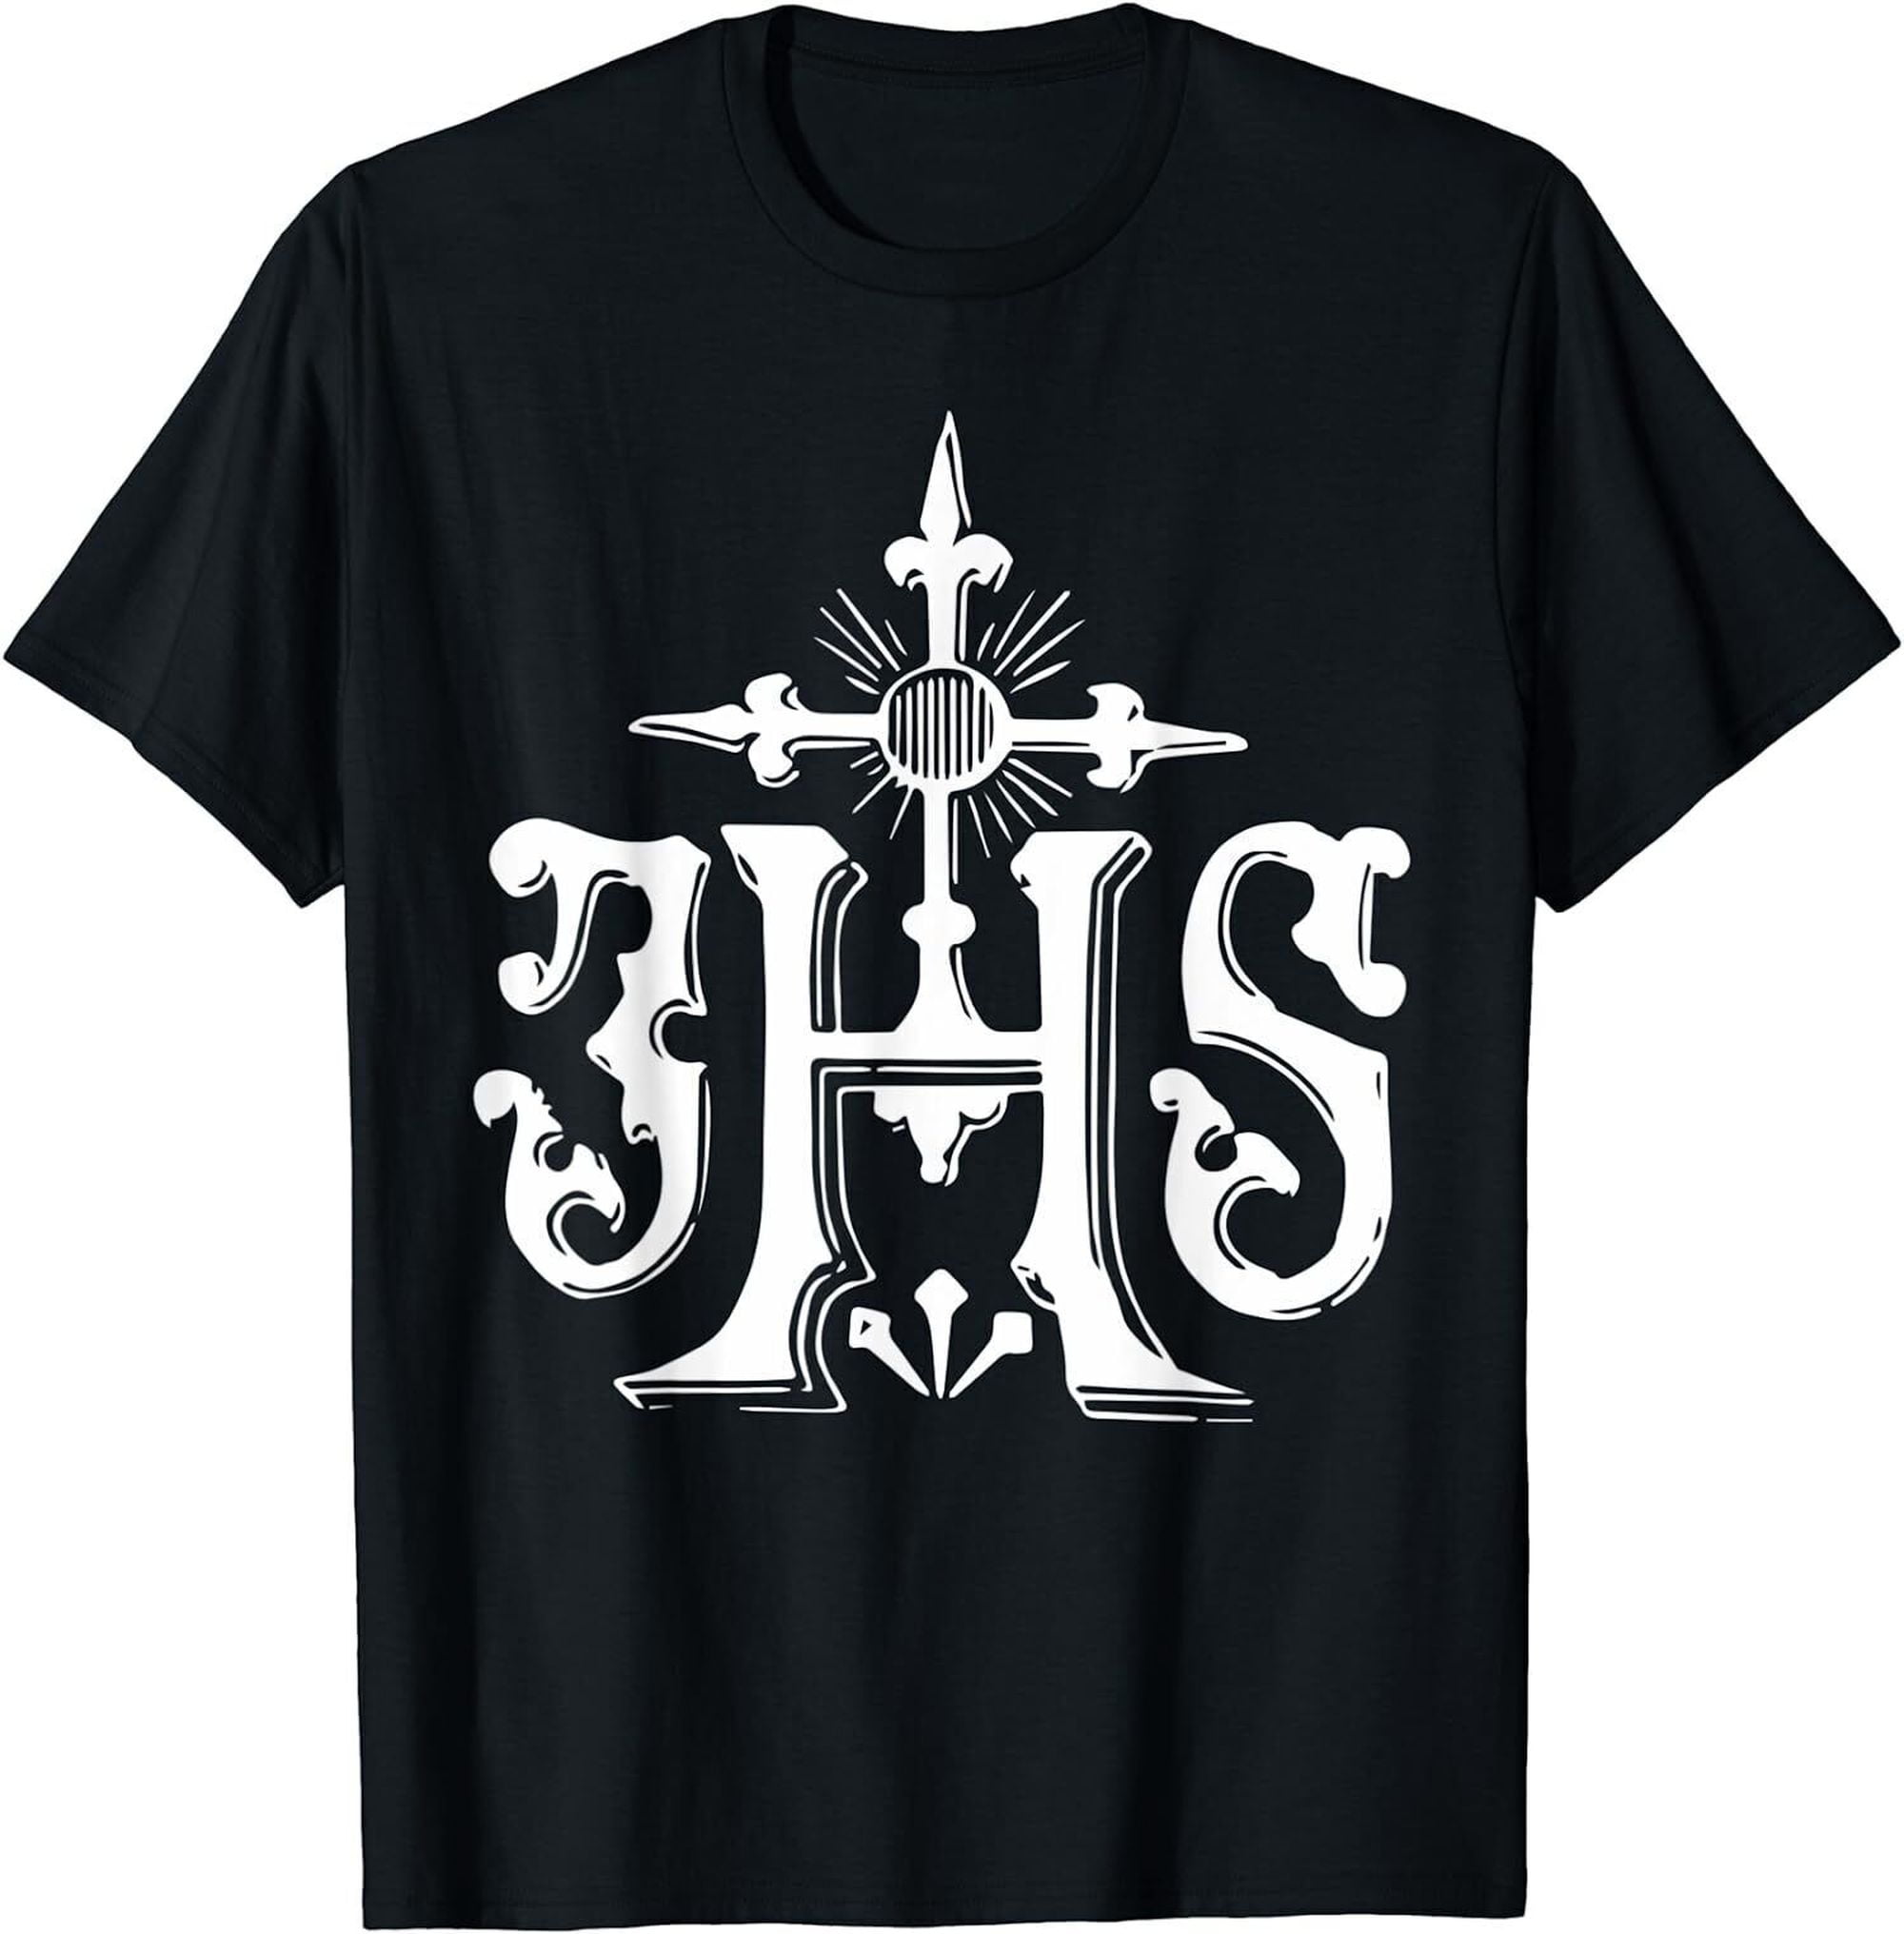 Boldly Express Your Faith with a Stylish Catholic Cross T-Shirt ...